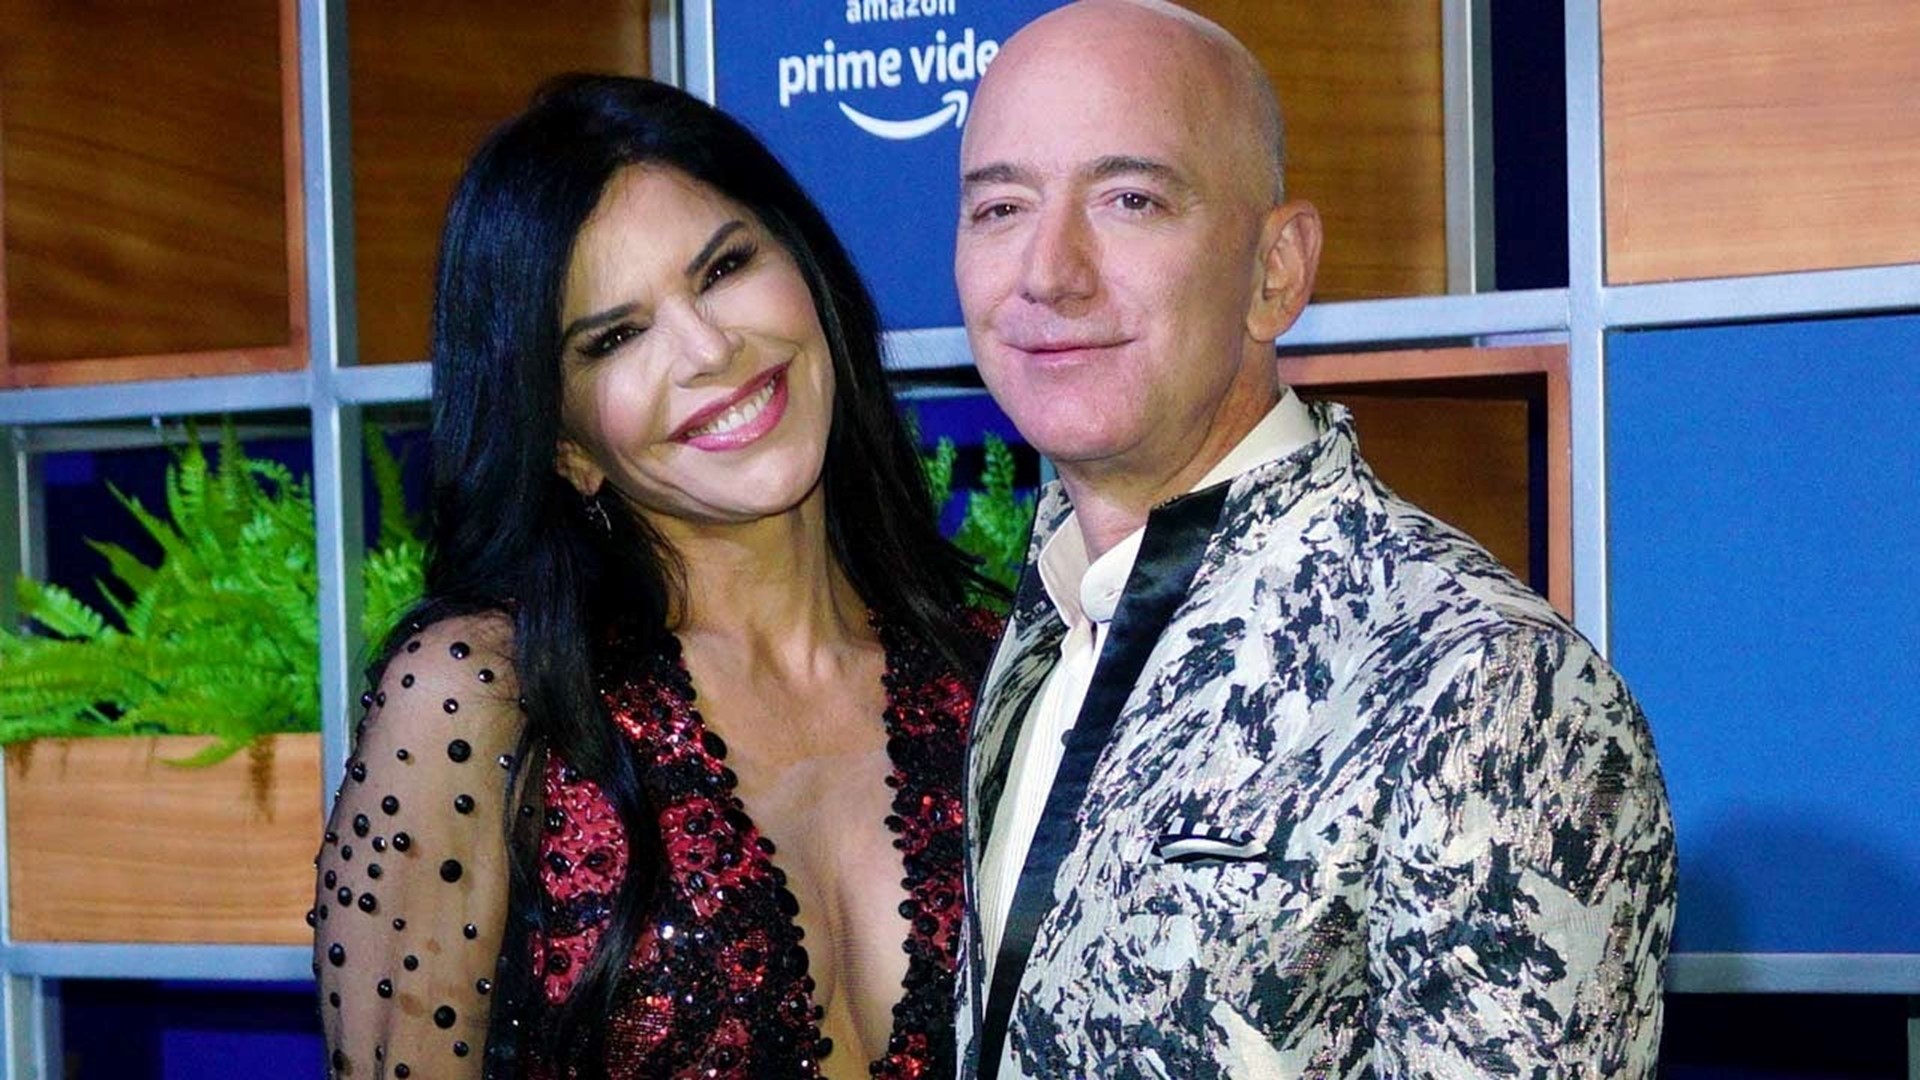 Jeff Bezos And Girlfriend Lauren Sanchez Make Their Red Carpet Debut As